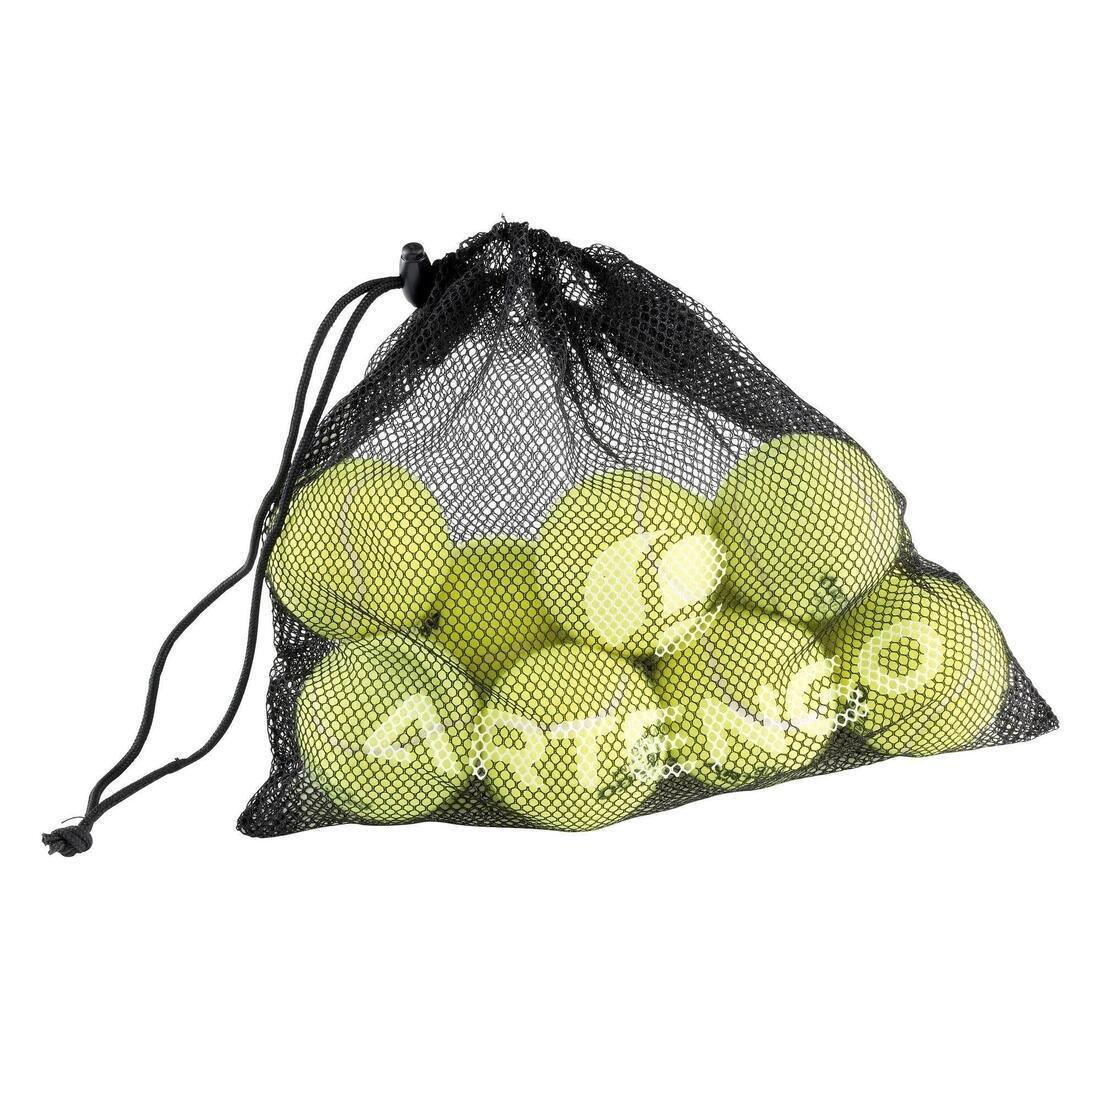 ARTENGO - Net For 10 Tennis Balls, Black